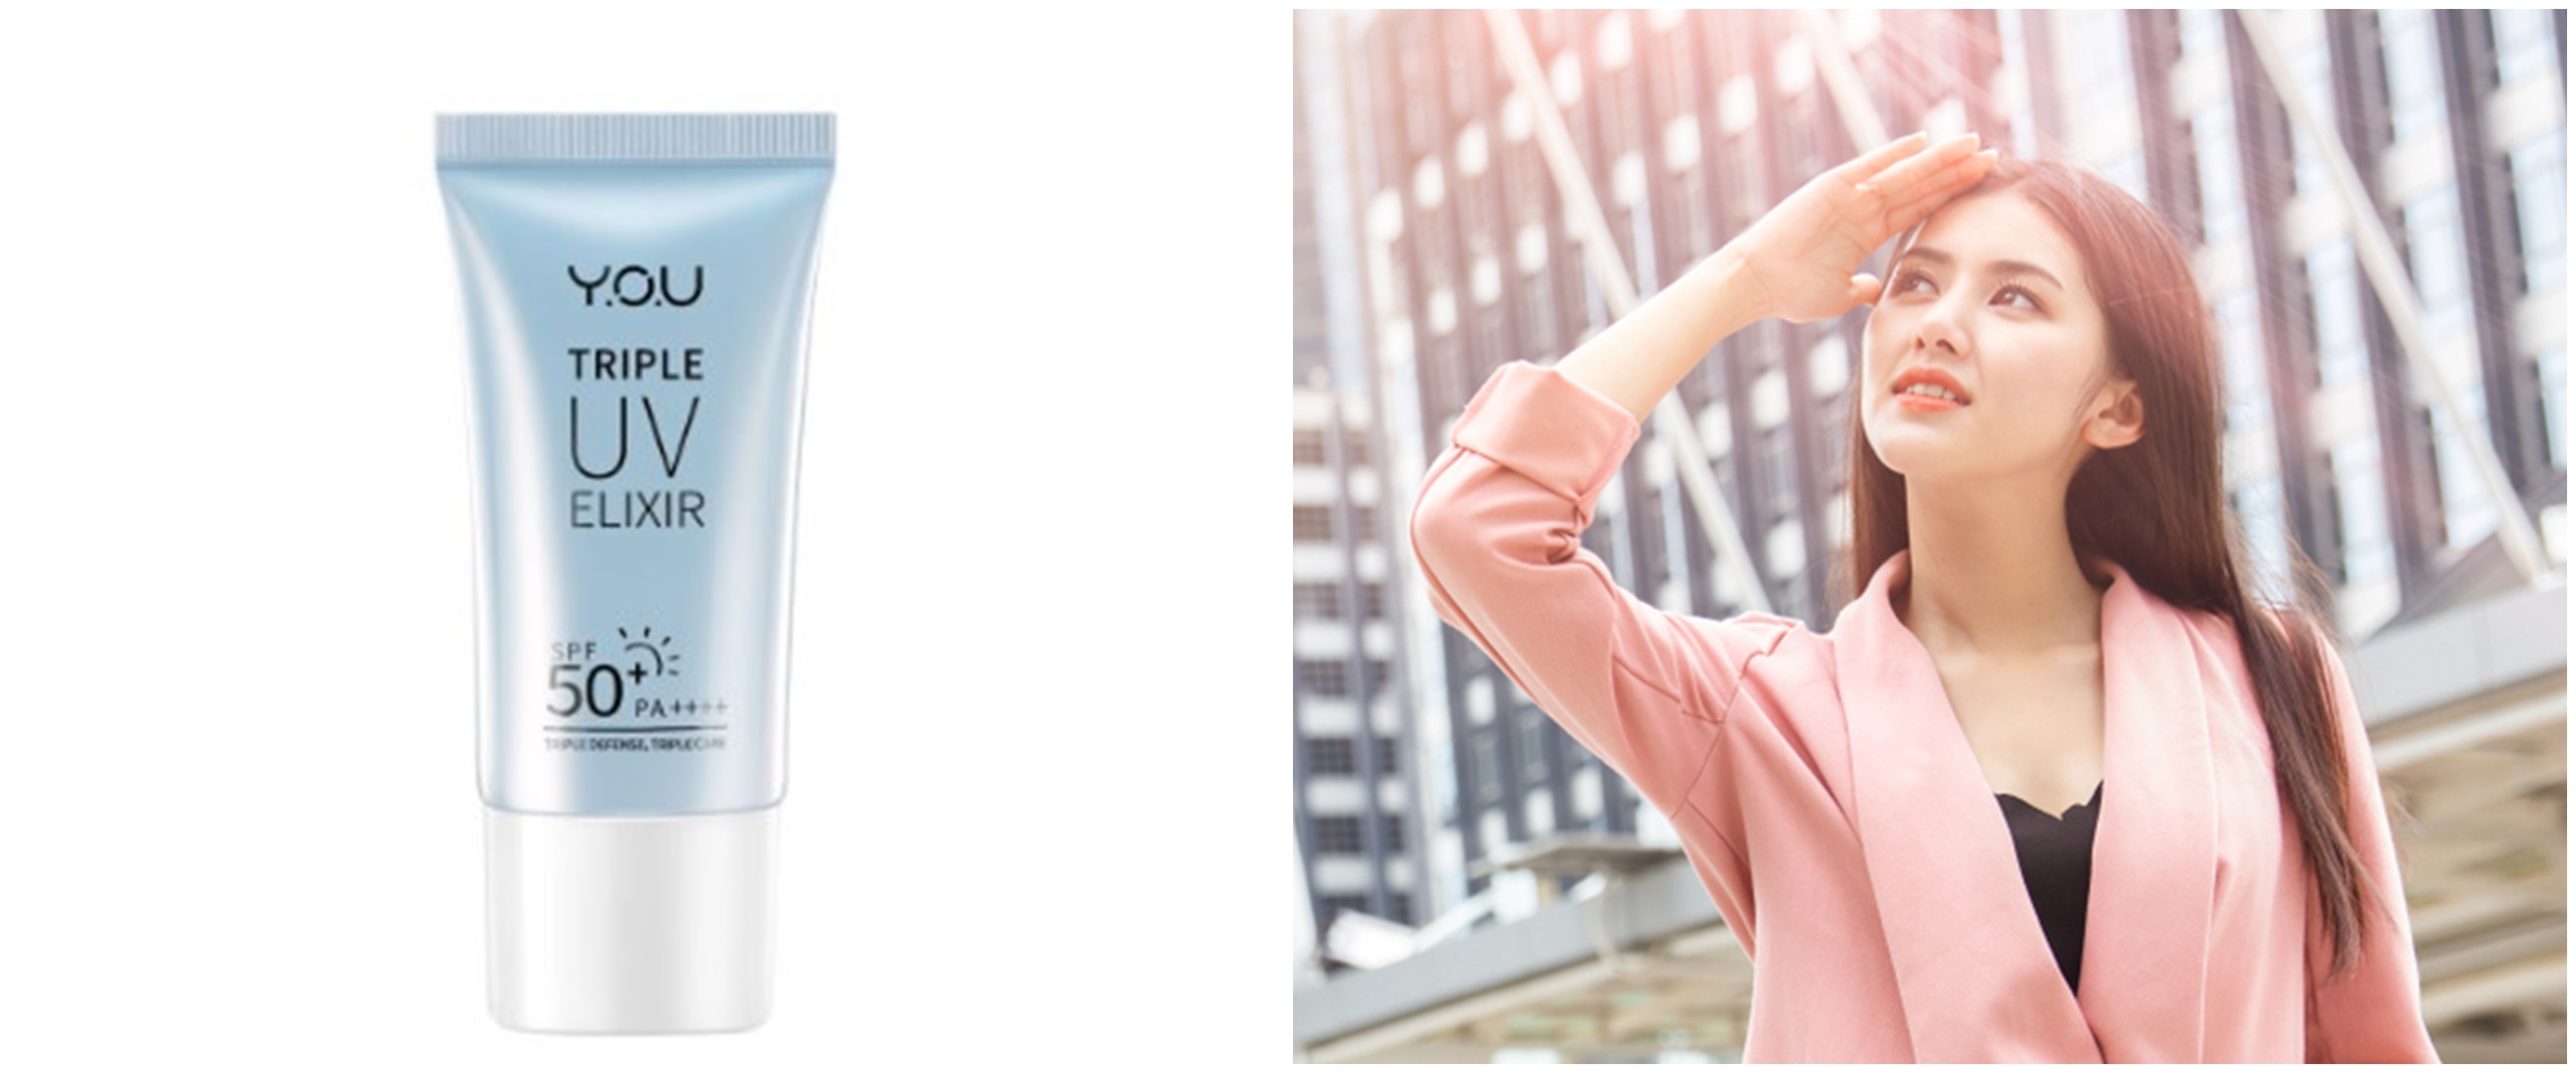 YOU Triple UV Elixir Sunscreen, pilihan sempurna proteksi kulit kering dari sinar matahari & bluelight